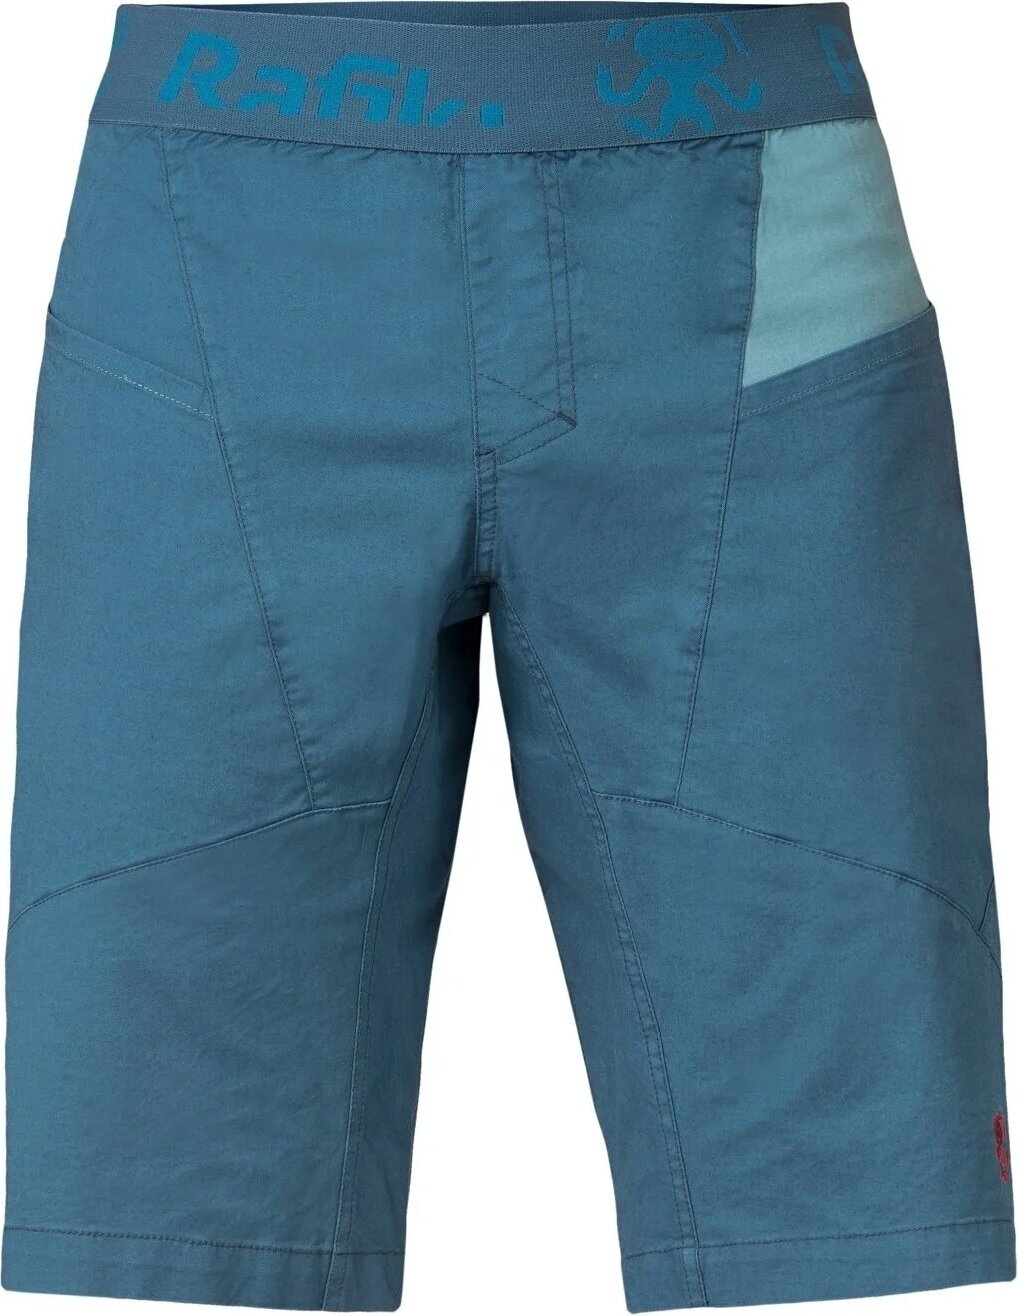 Pantalones cortos para exteriores Rafiki Megos Man Shorts Stargazer/Atlantic L Pantalones cortos para exteriores